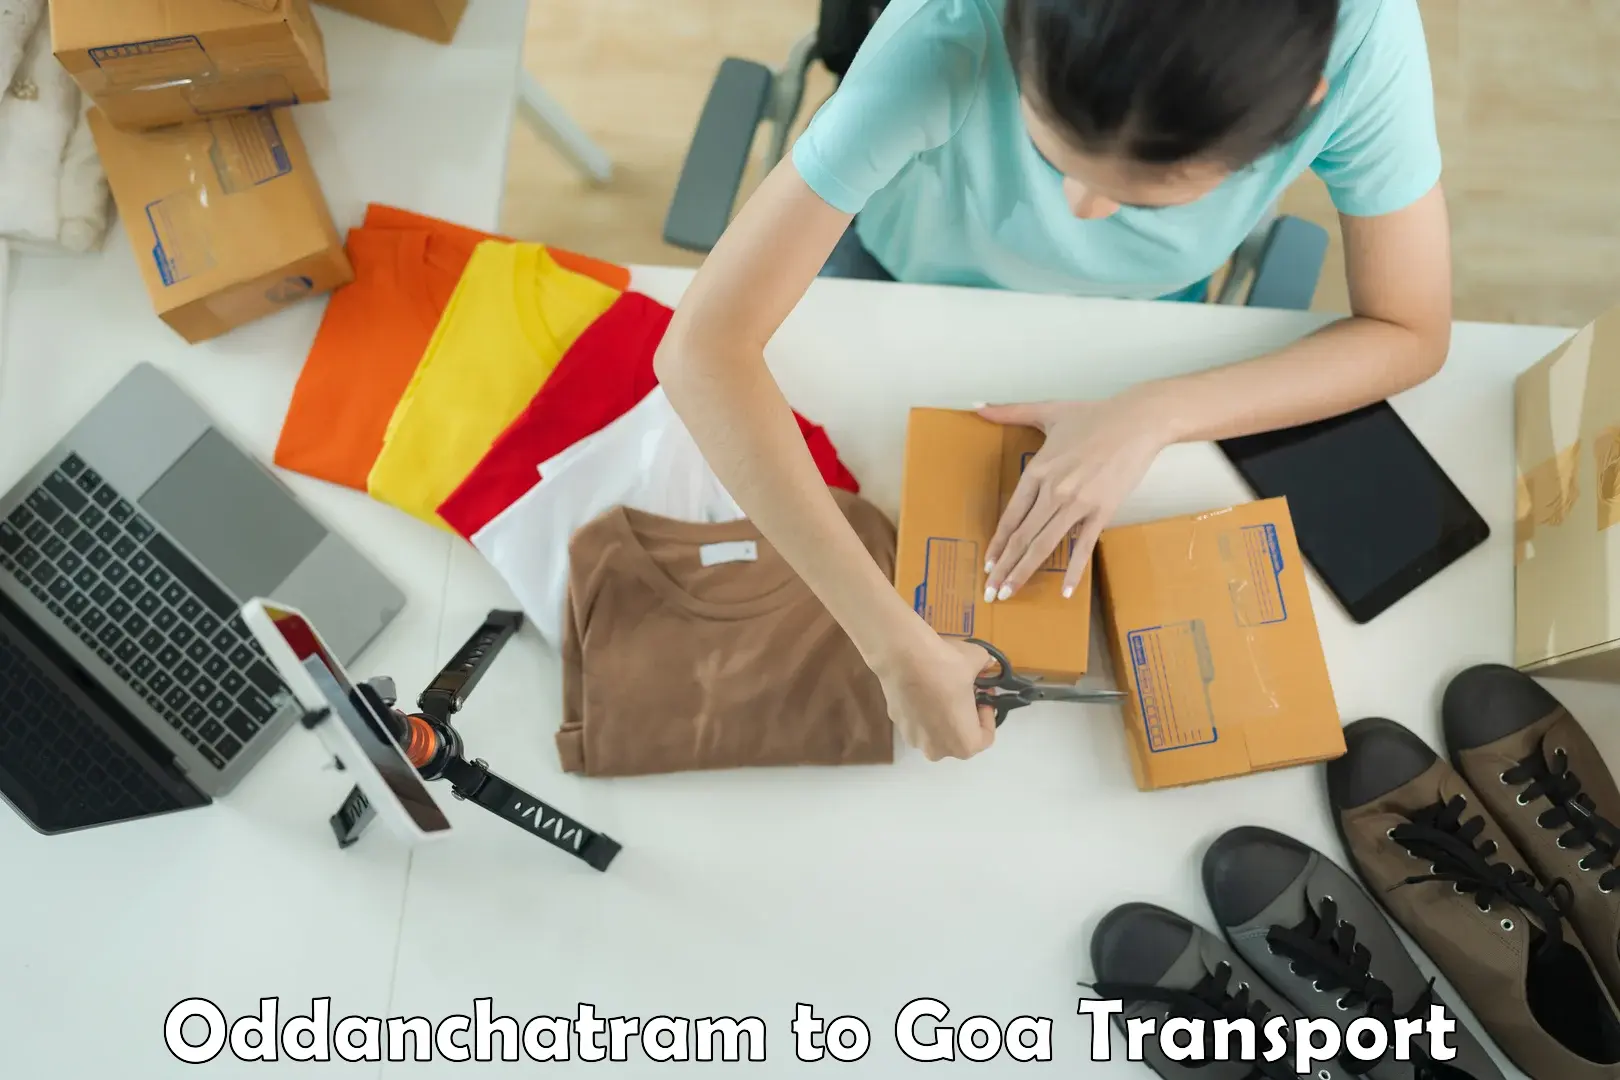 Shipping partner Oddanchatram to Goa